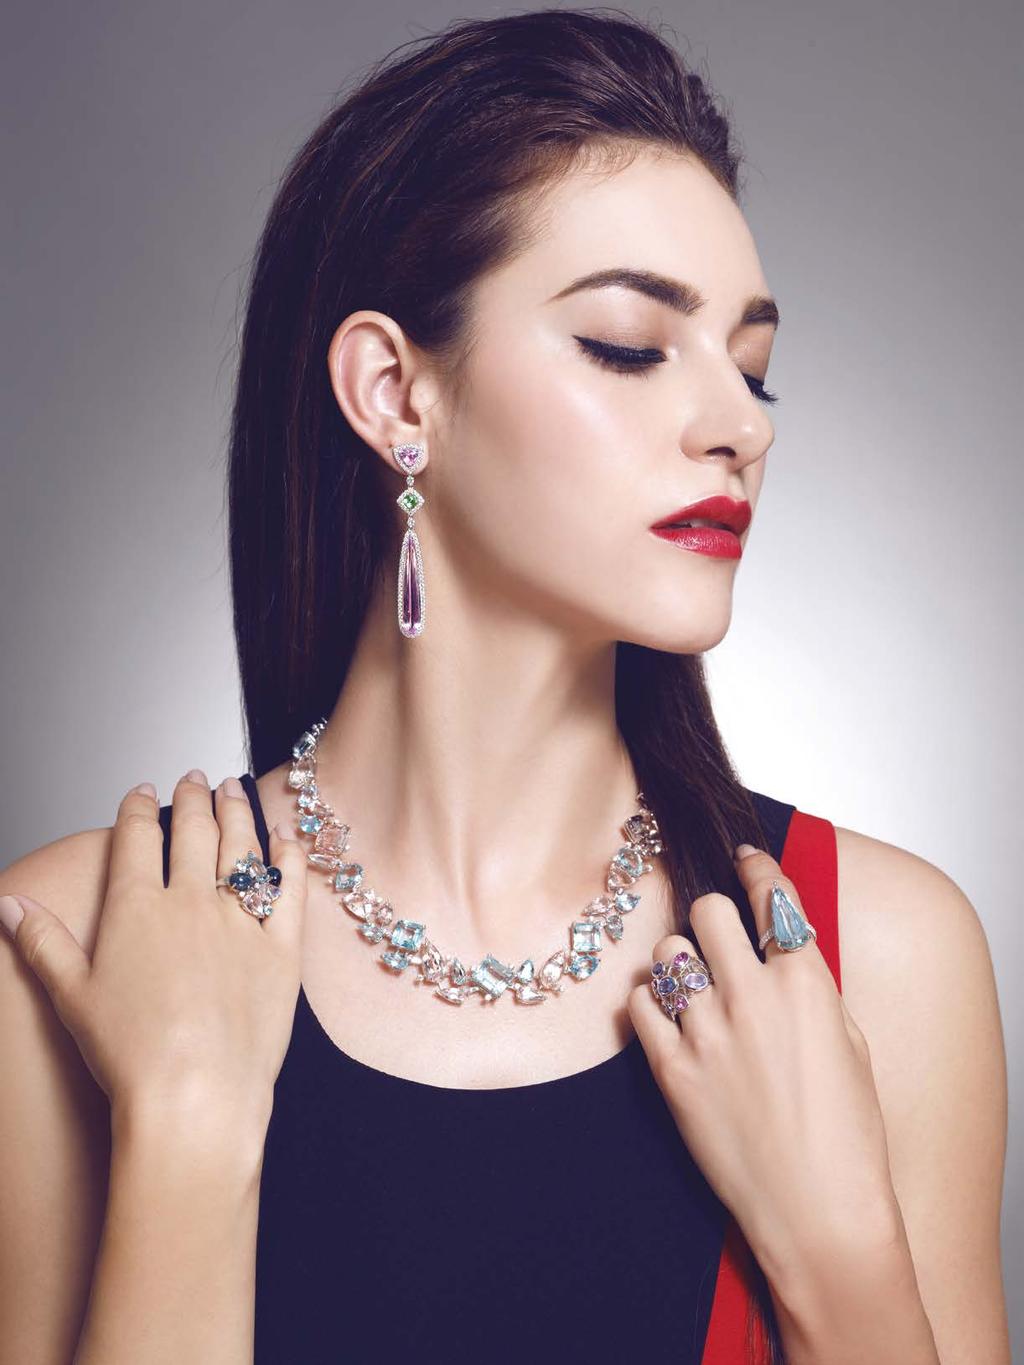 SHOWCASE Necklace: 18-karat white gold with aquamarines, morganites and diamonds Earrings: Kunzite, green tourmaline